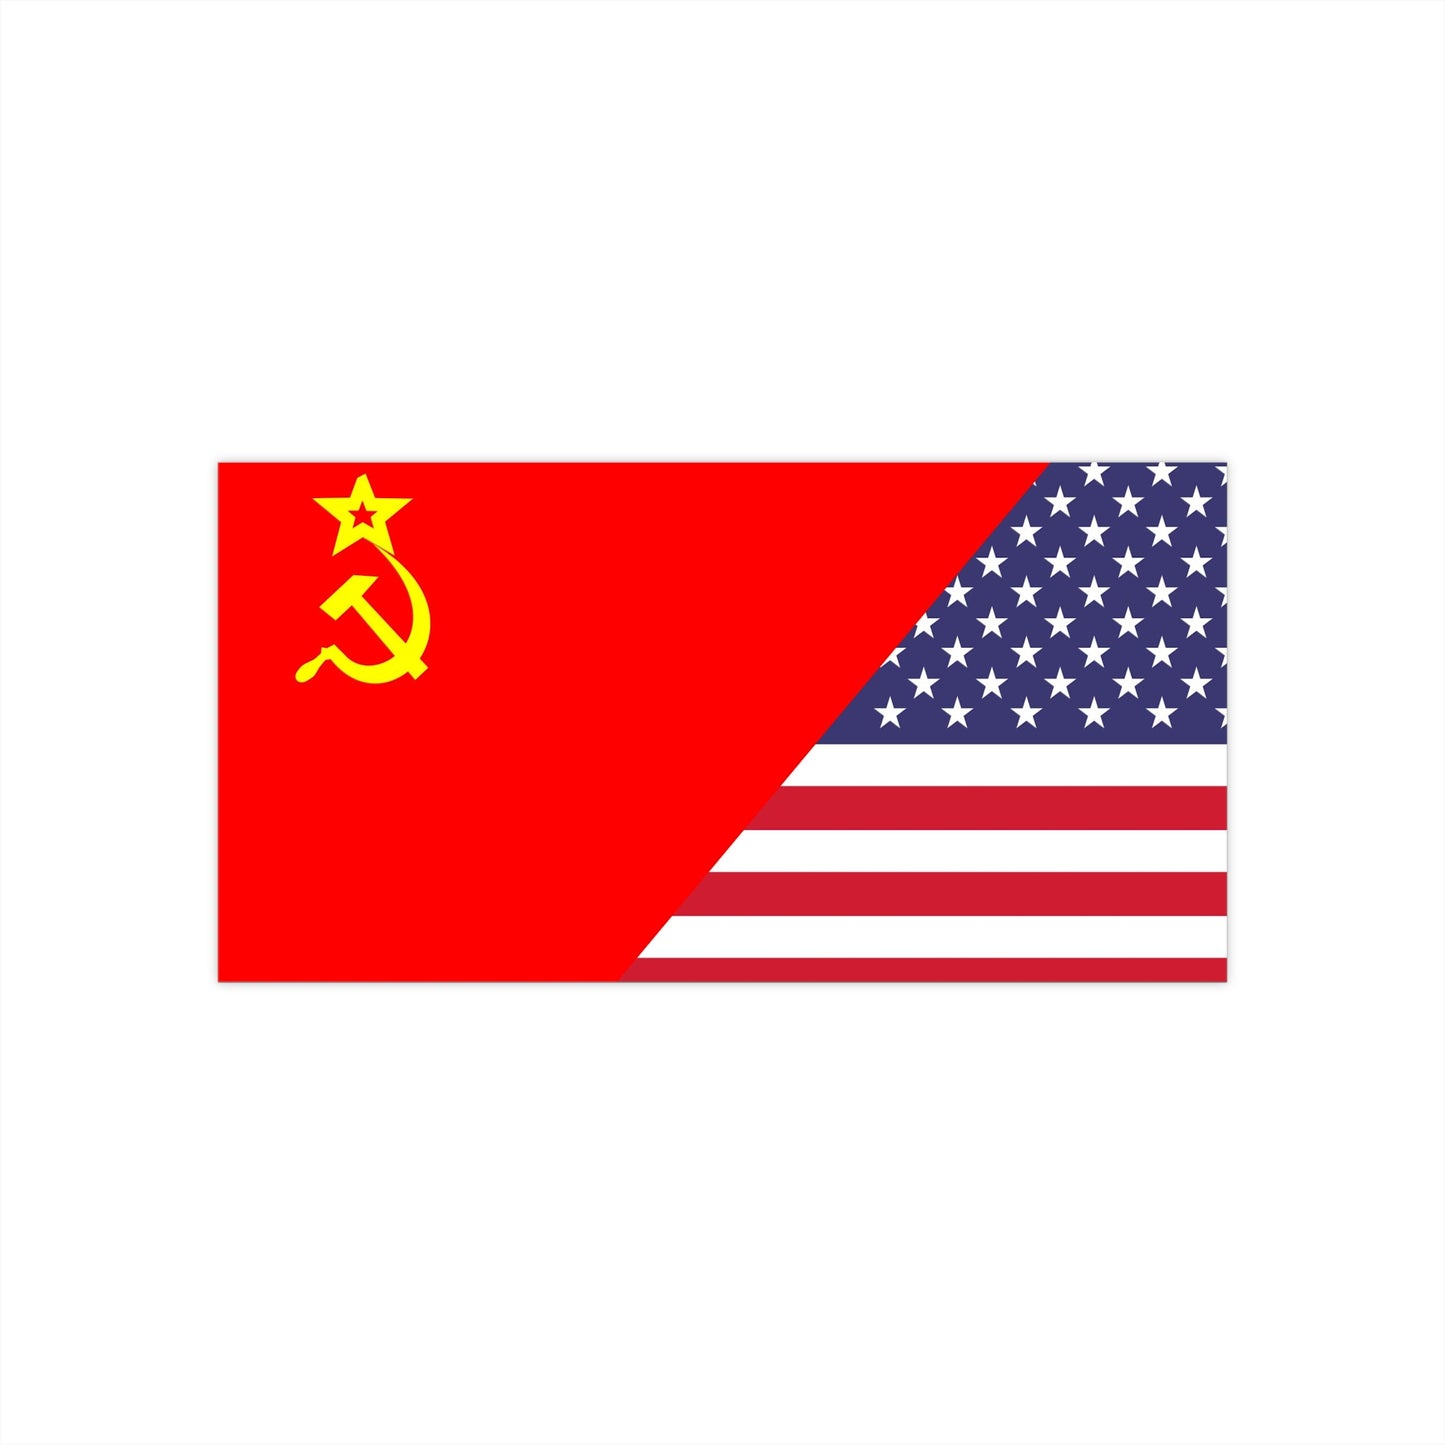 USSR /СССР American Flag Bumper Stickers